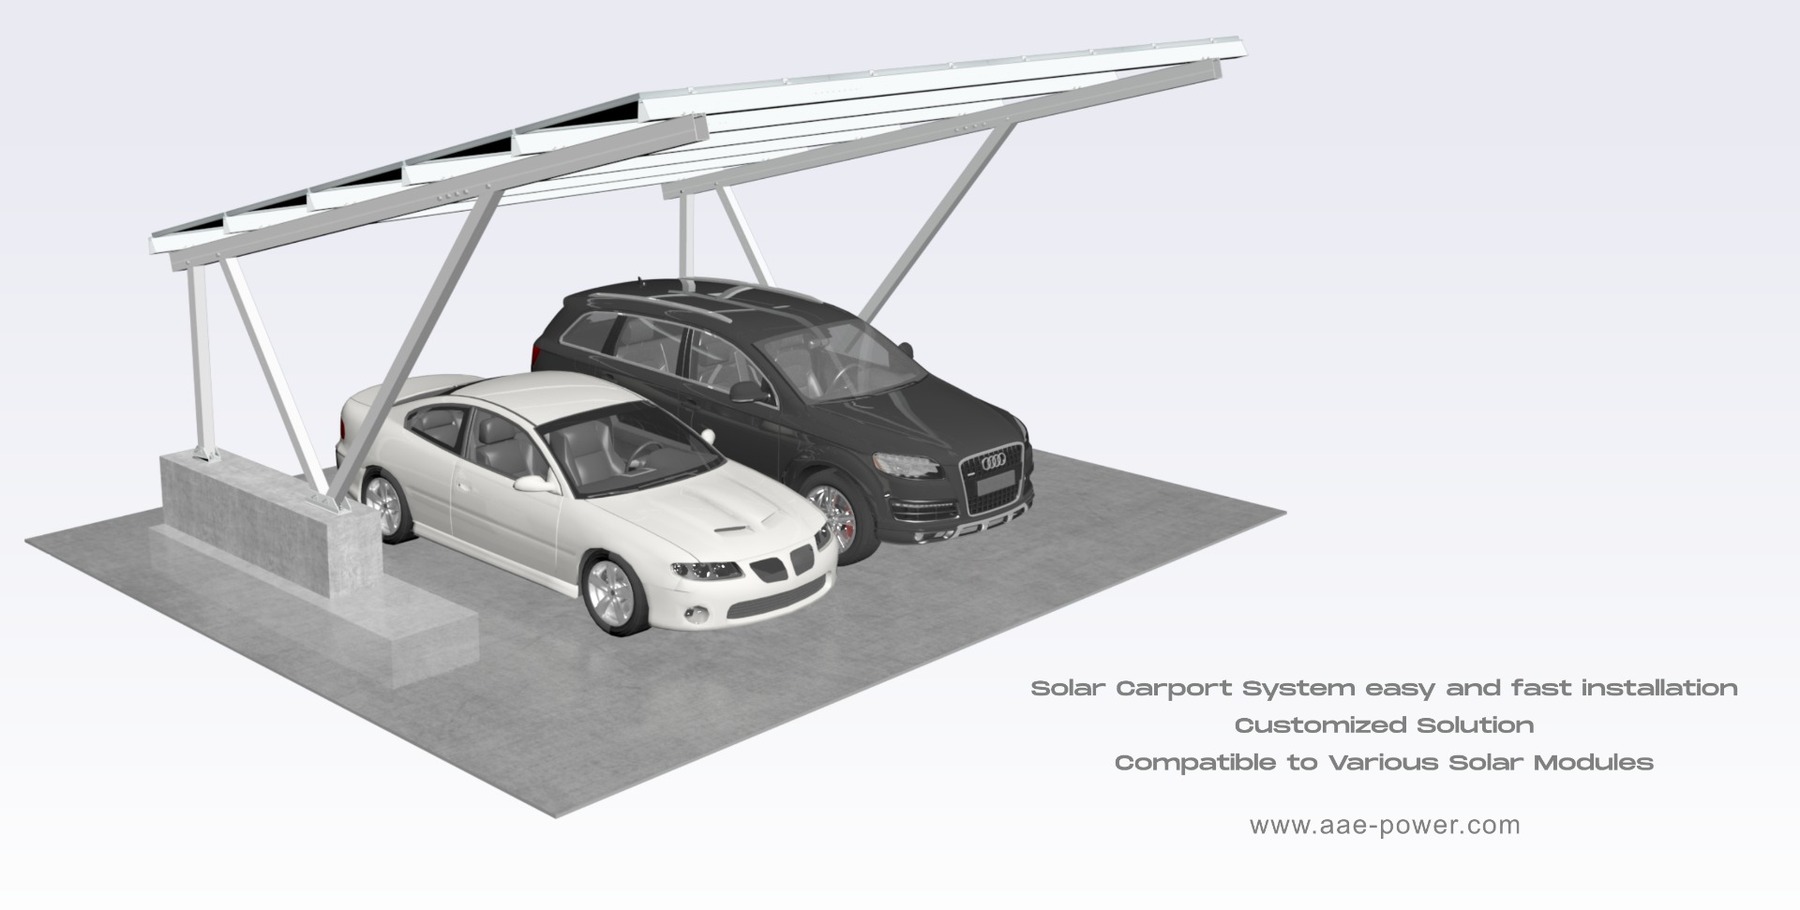 AAE Solar Carport System